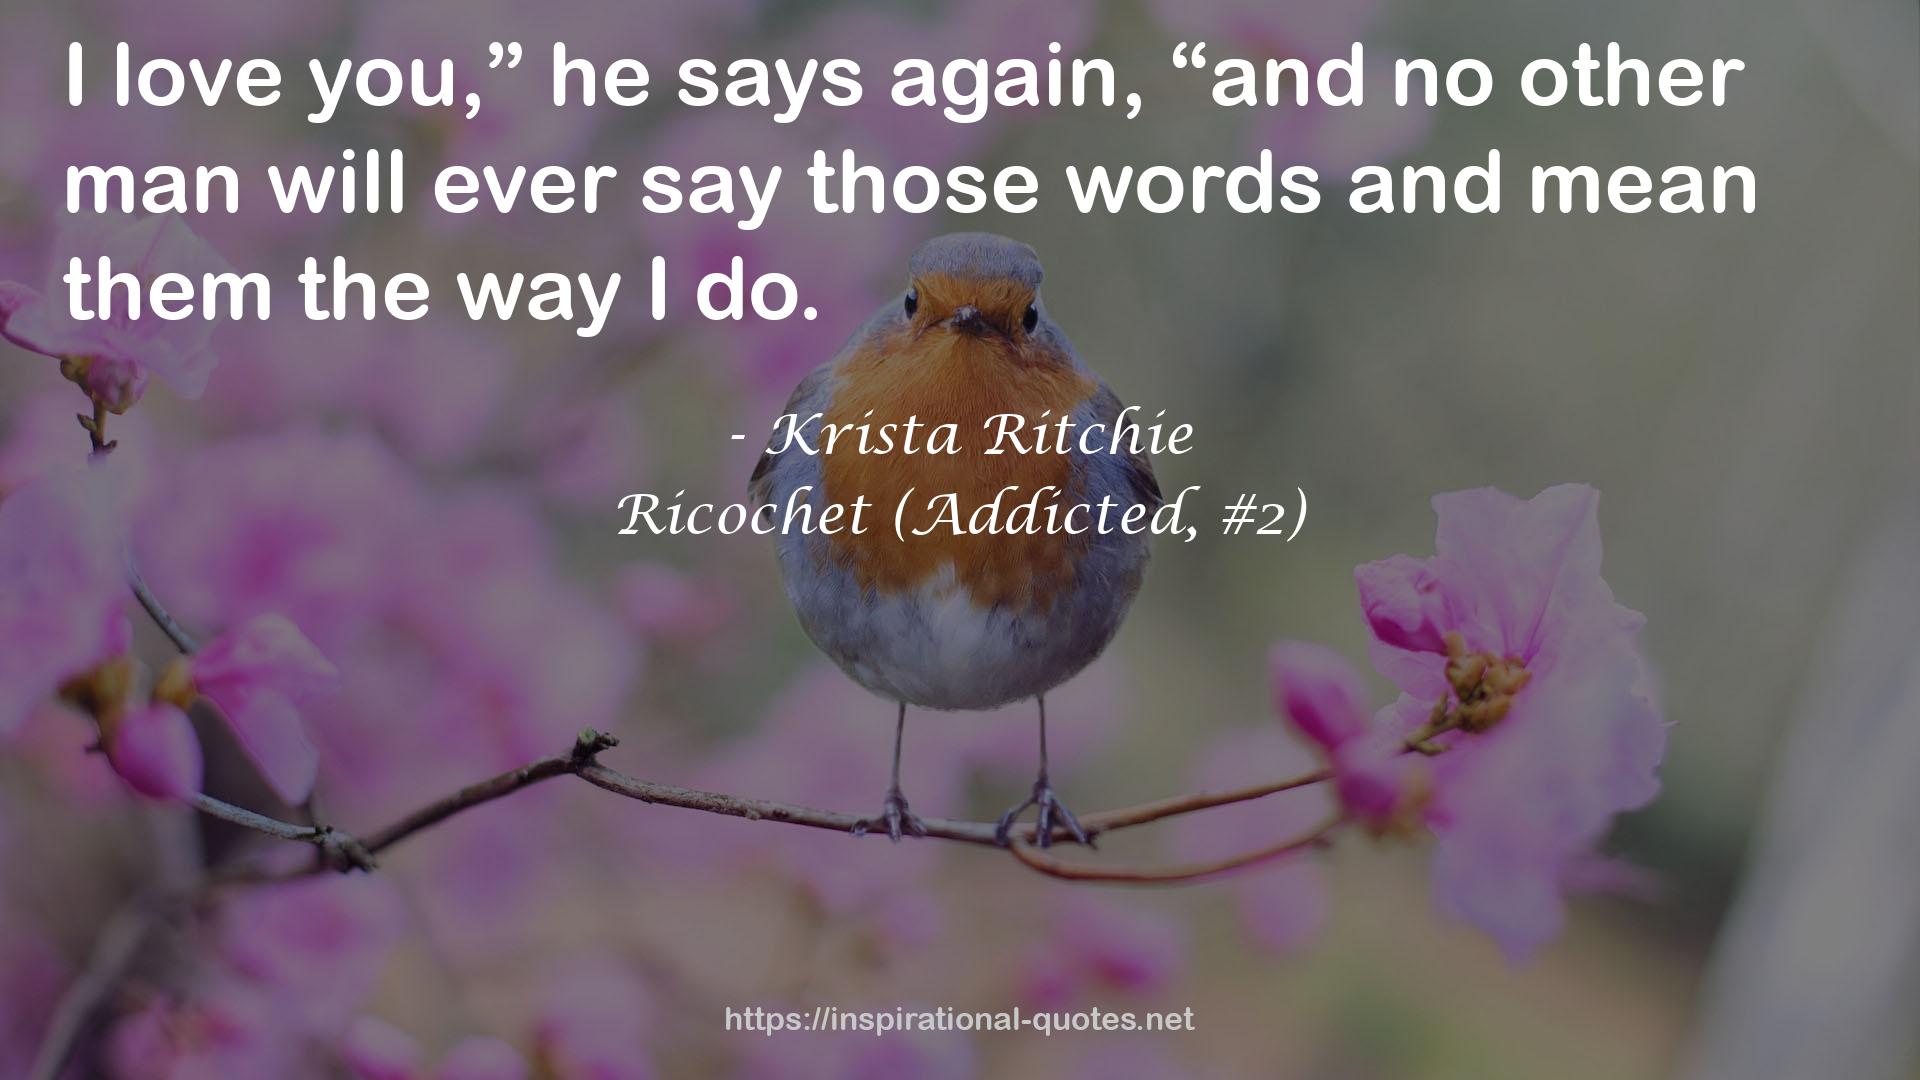 Ricochet (Addicted, #2) QUOTES